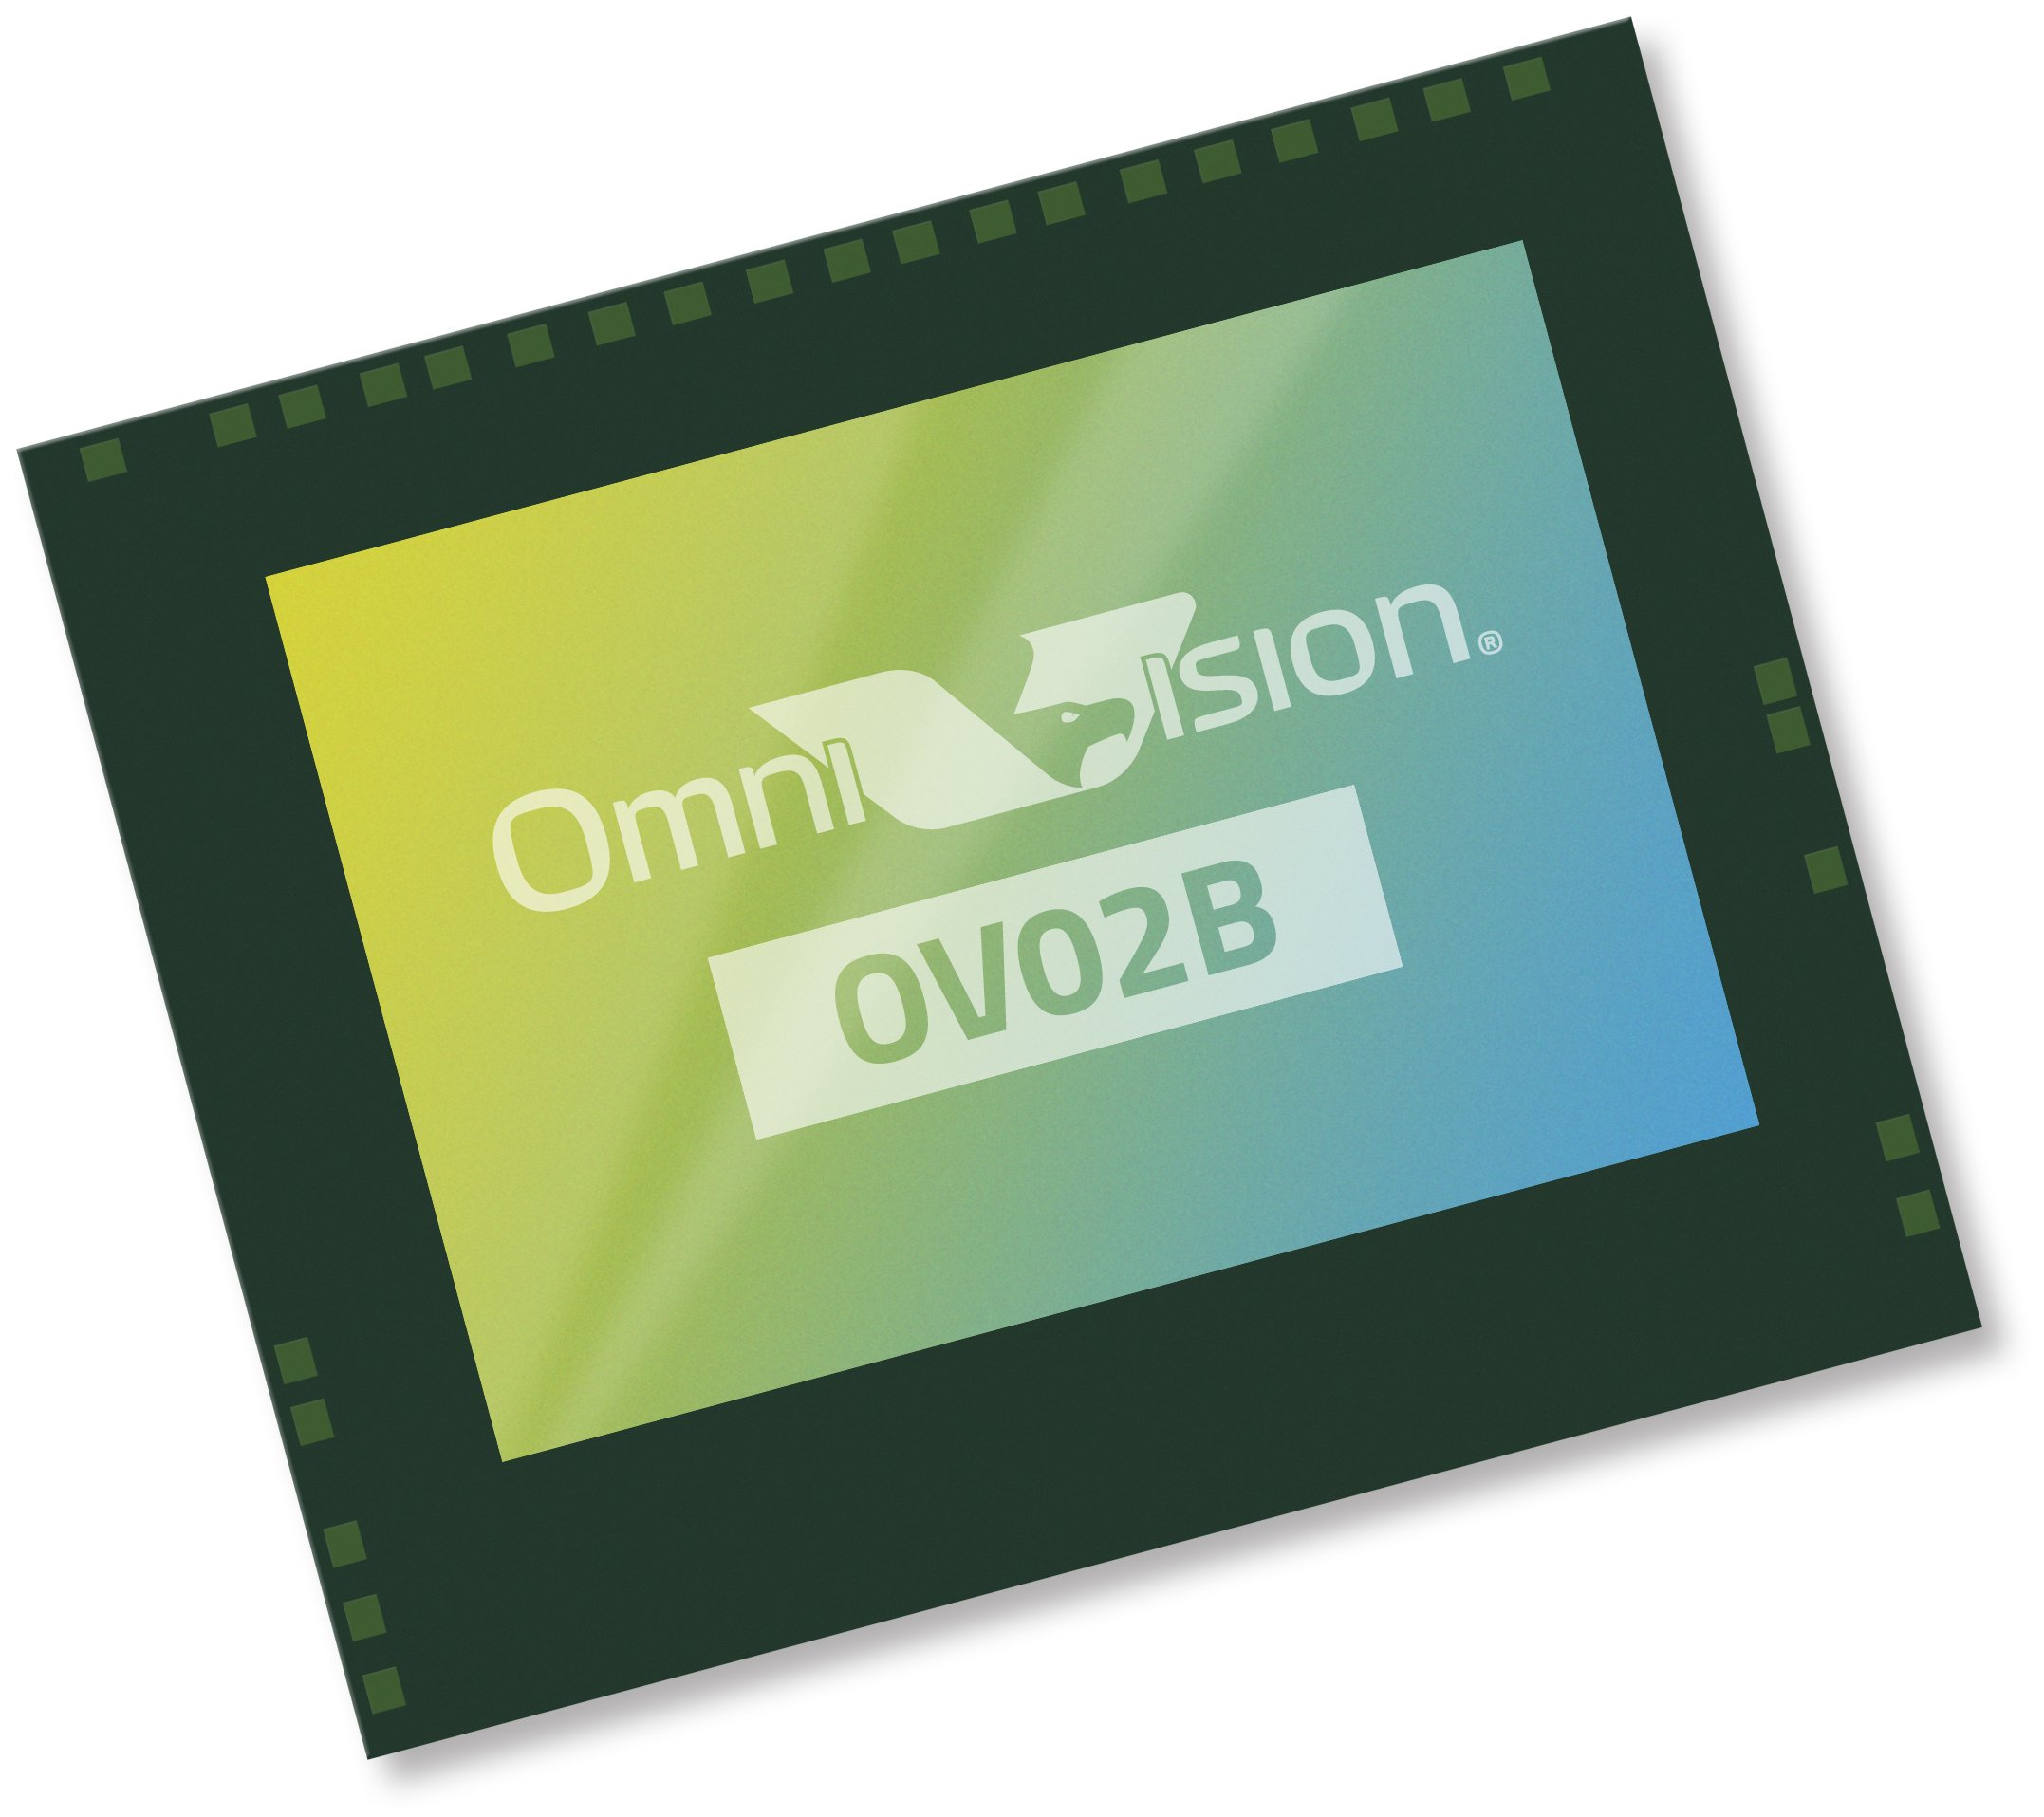 OmniVision OV02B